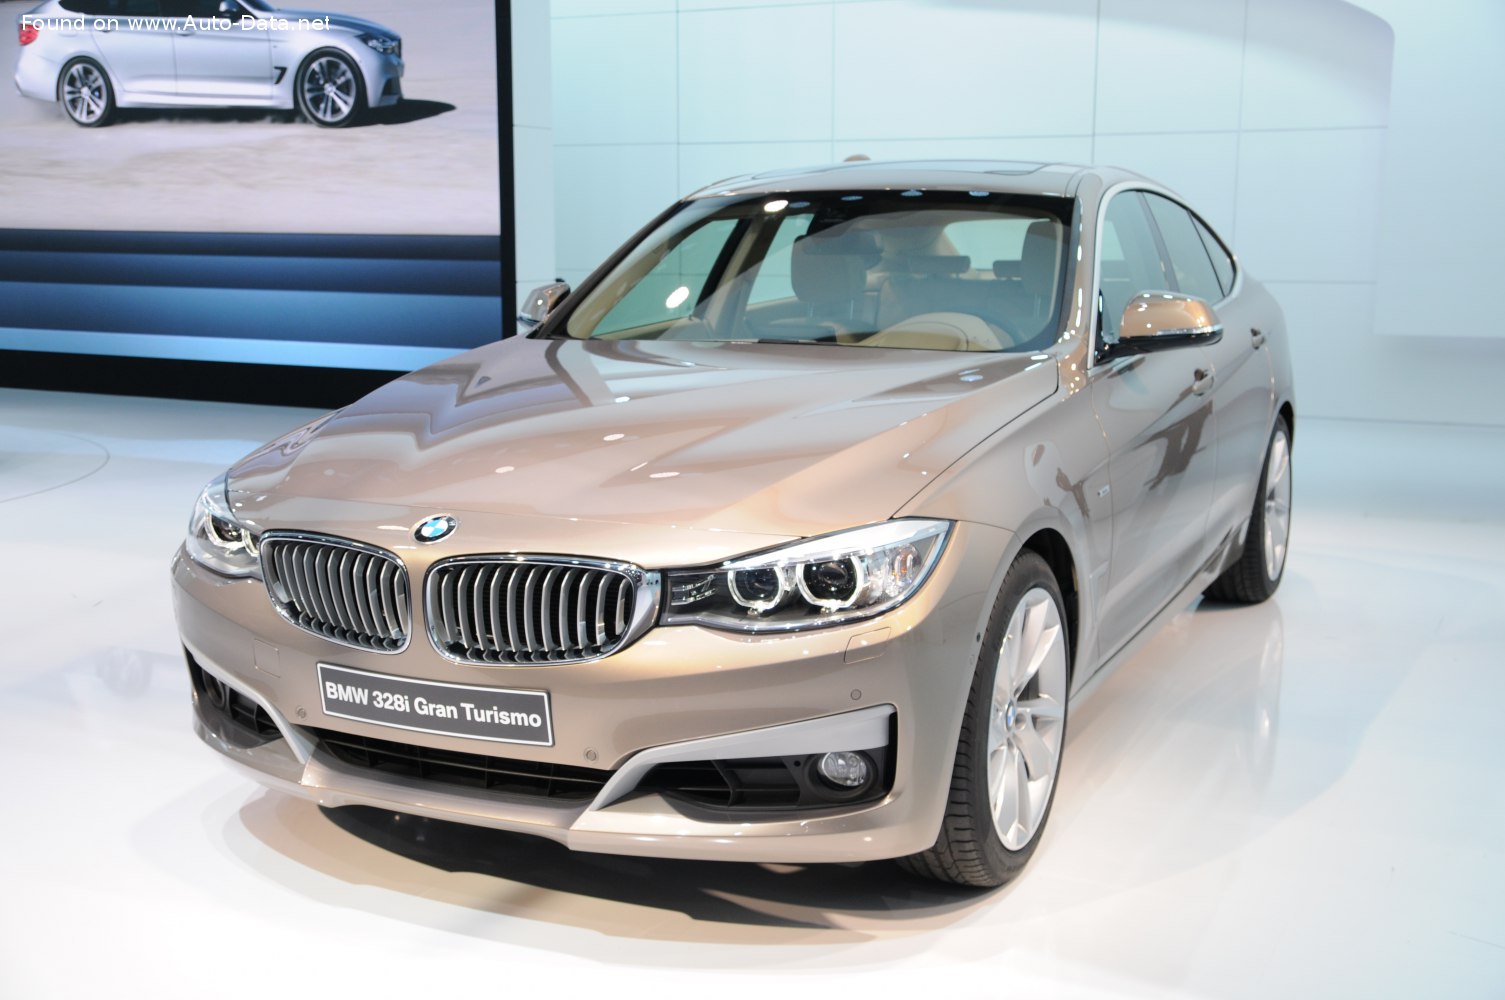 2013 BMW 3 Series Gran Turismo (F34) 320i (184 Hp) | Technical specs, data, fuel consumption, Dimensions